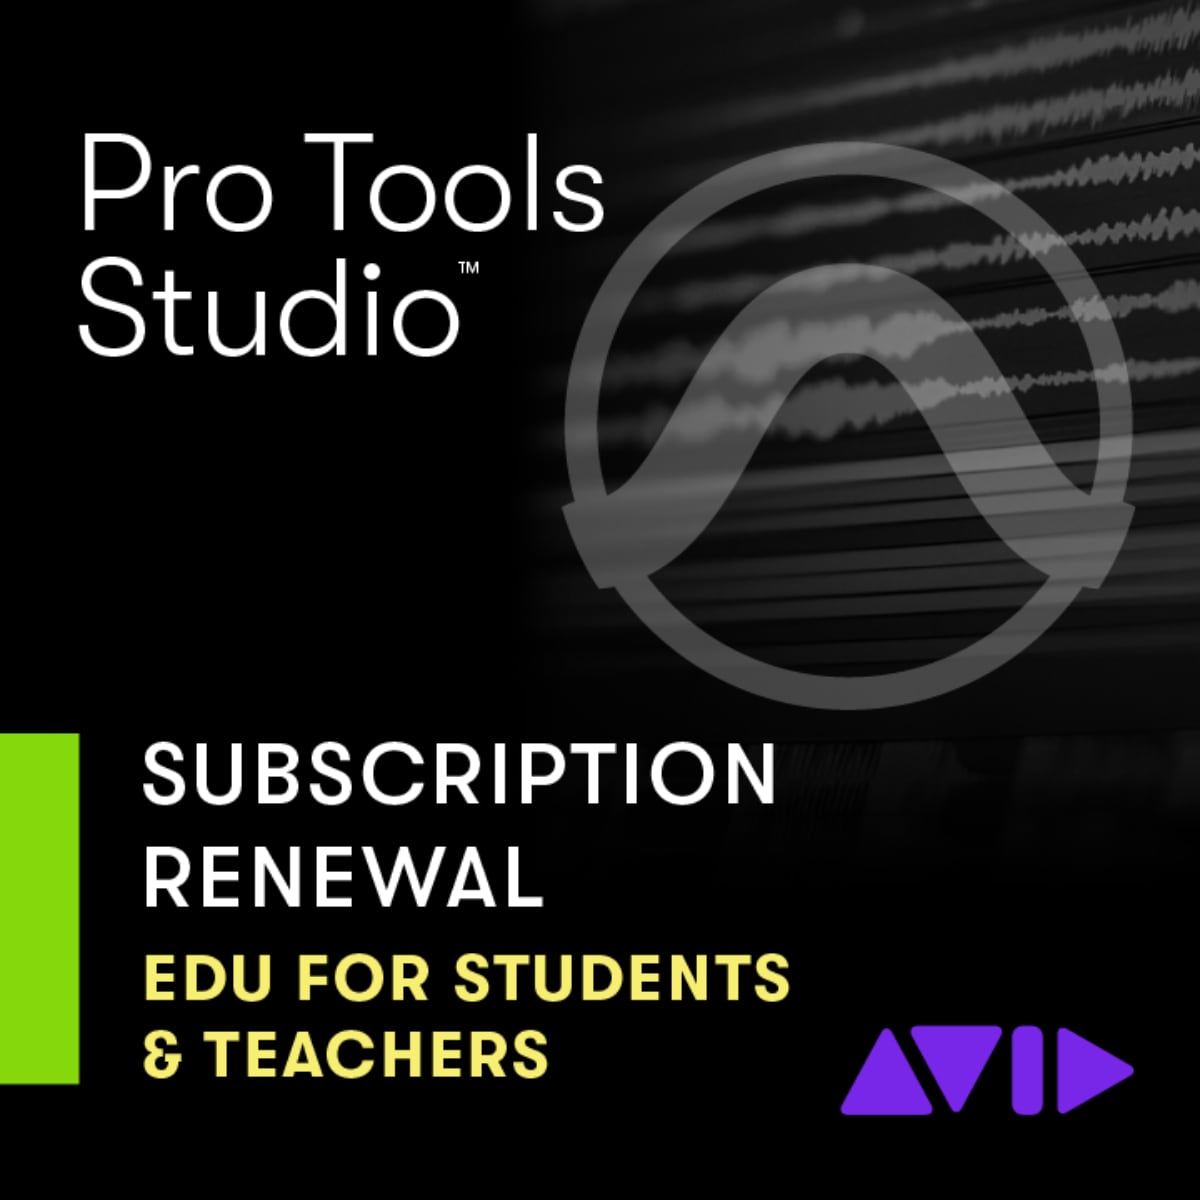 Pro Tools Studio Subscription EDU Students & Teachers Renewal